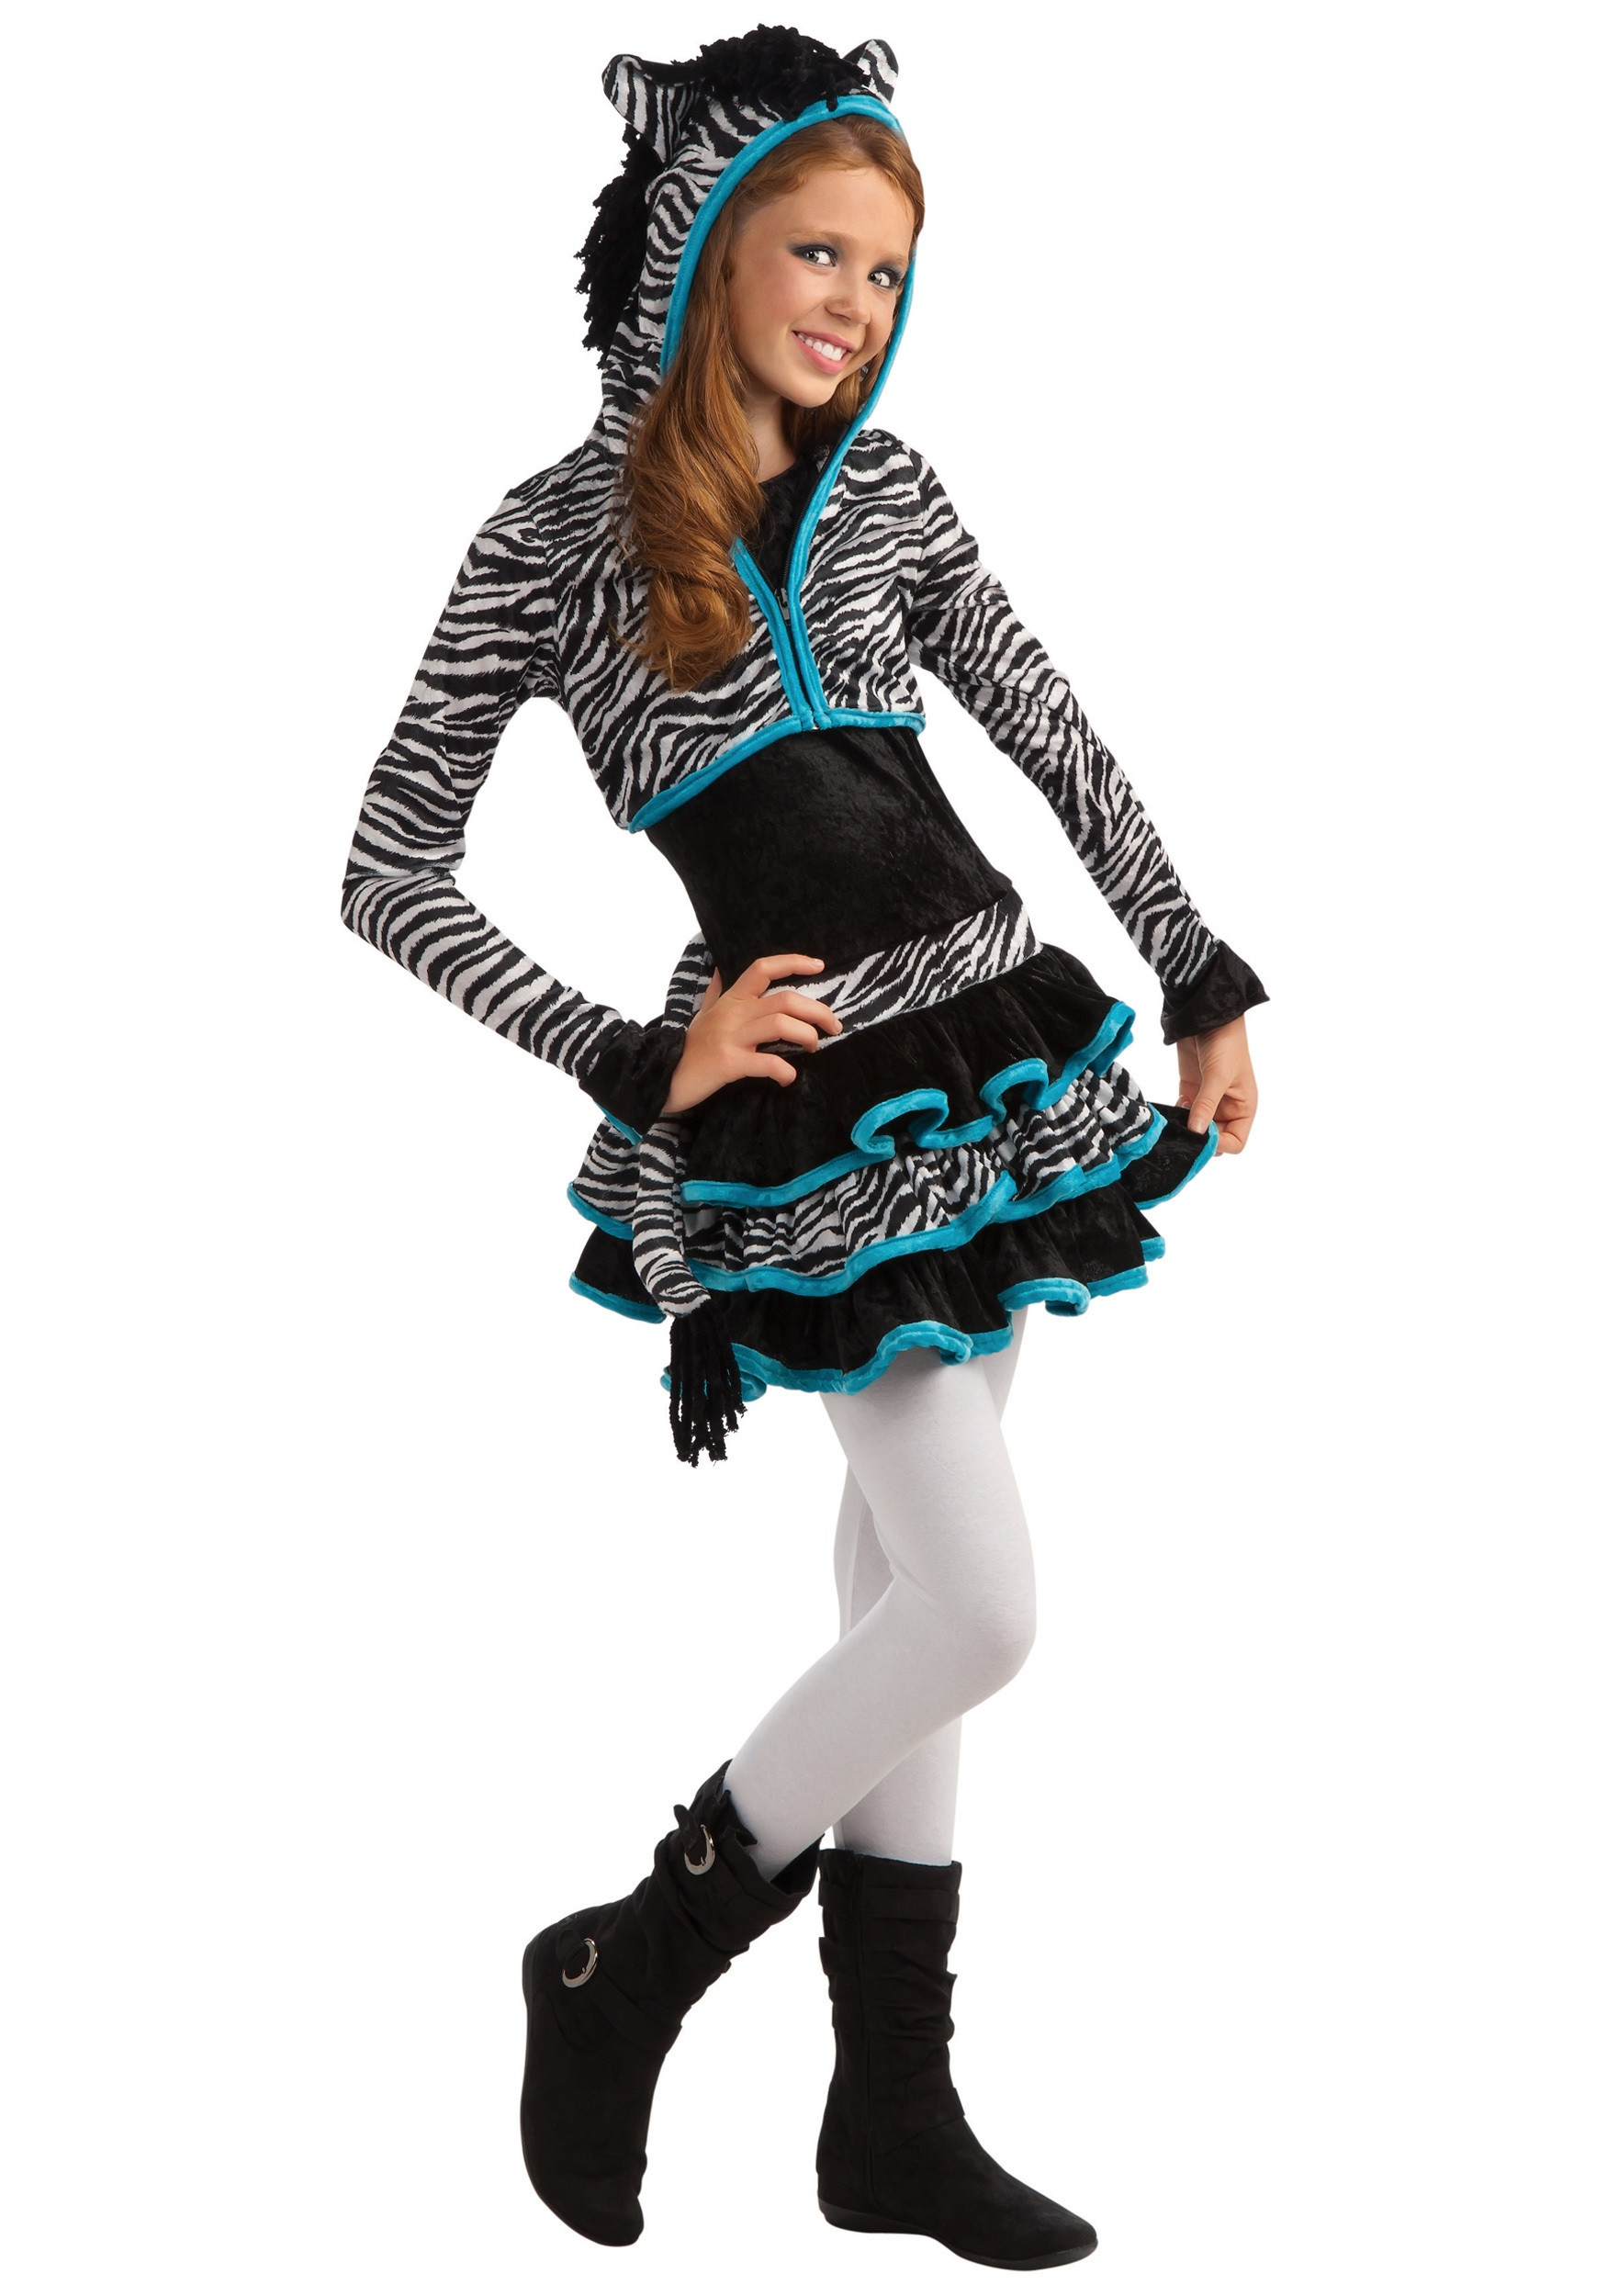 Best ideas about DIY Halloween Costumes For Tweens
. Save or Pin Tween Zebra Costume Now.